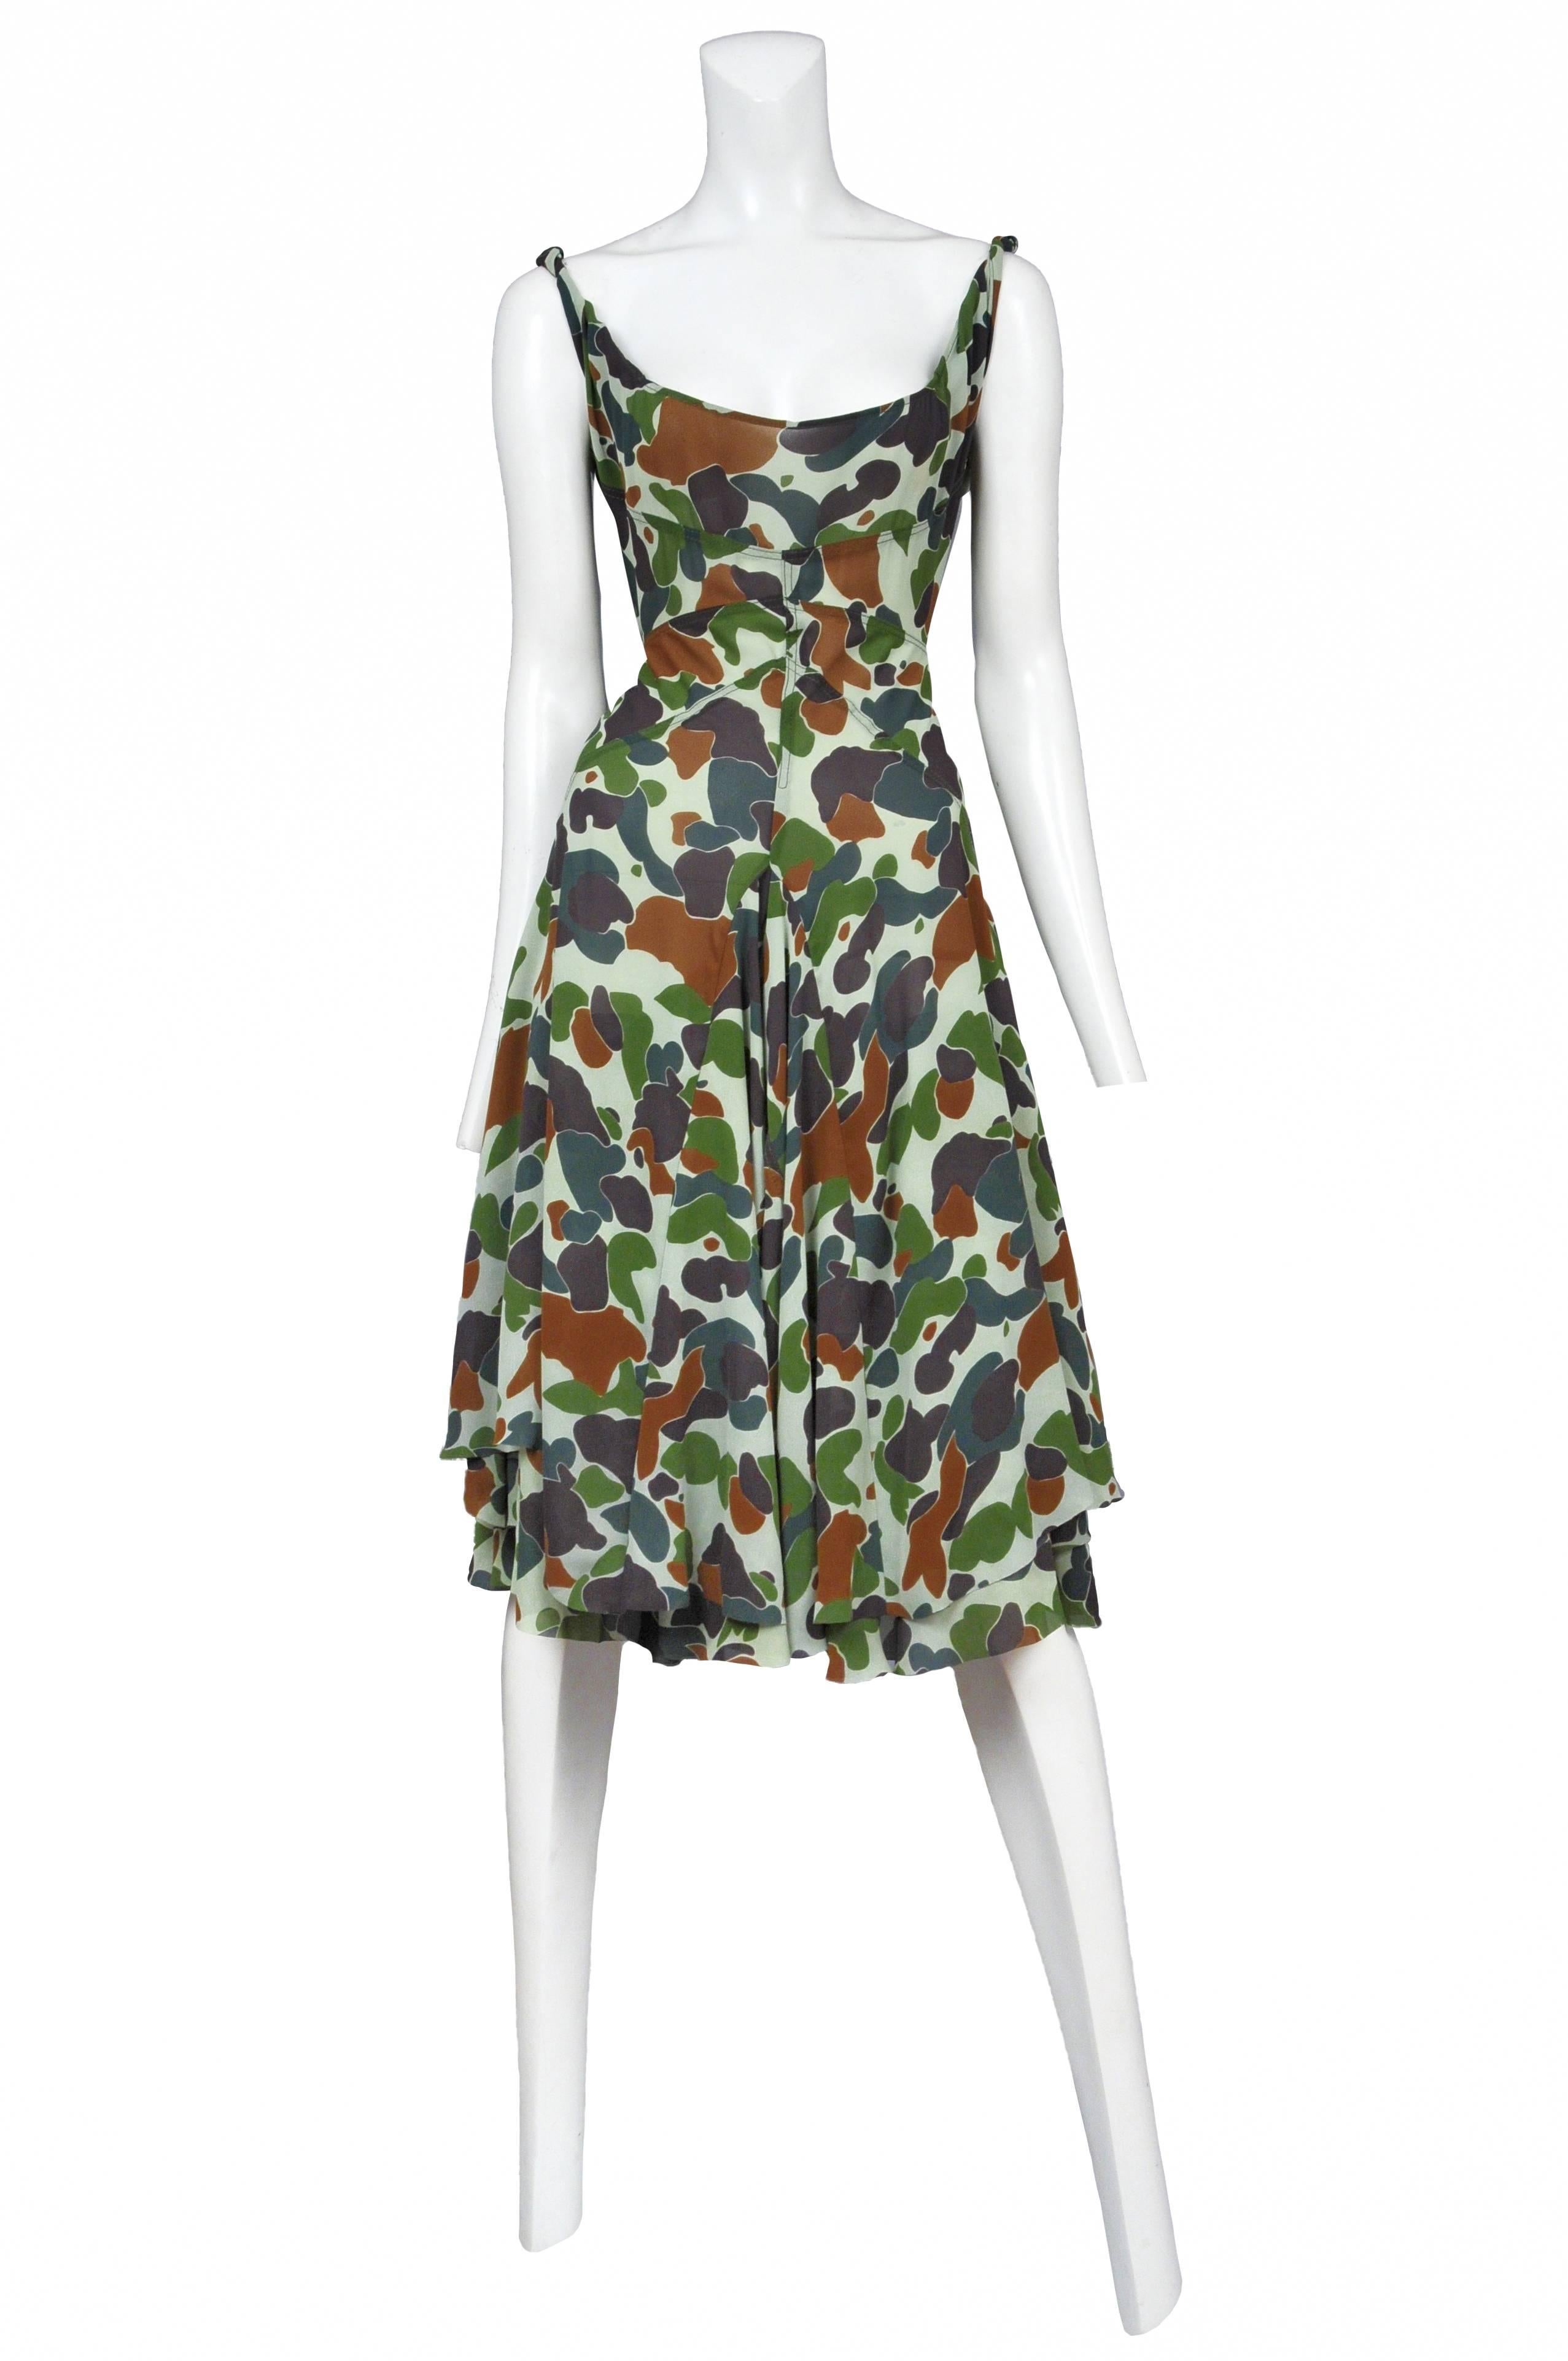 Junya Wantanabe sheer camouflage print structured dress with high hem swing skirt. 